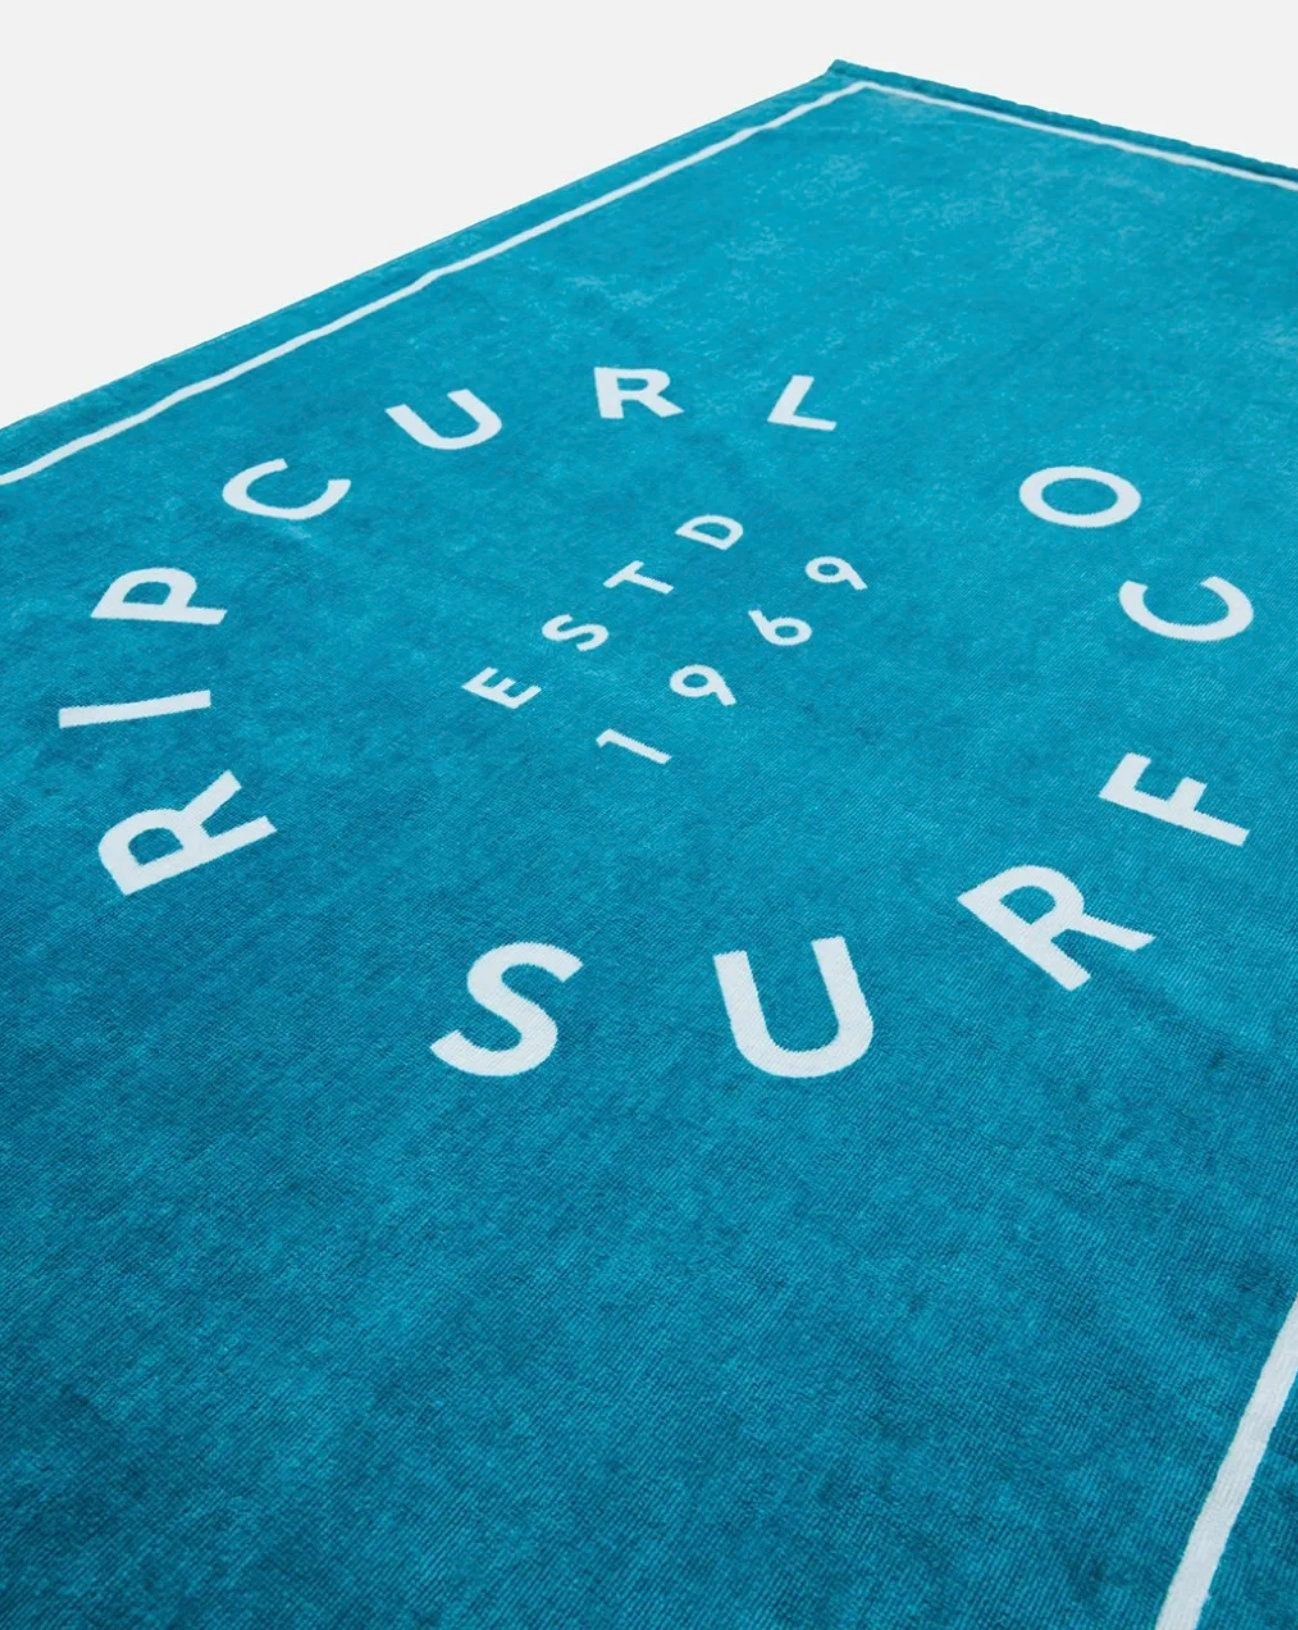 Premium Rip Handtuch großes Curl Blue Strandtuch